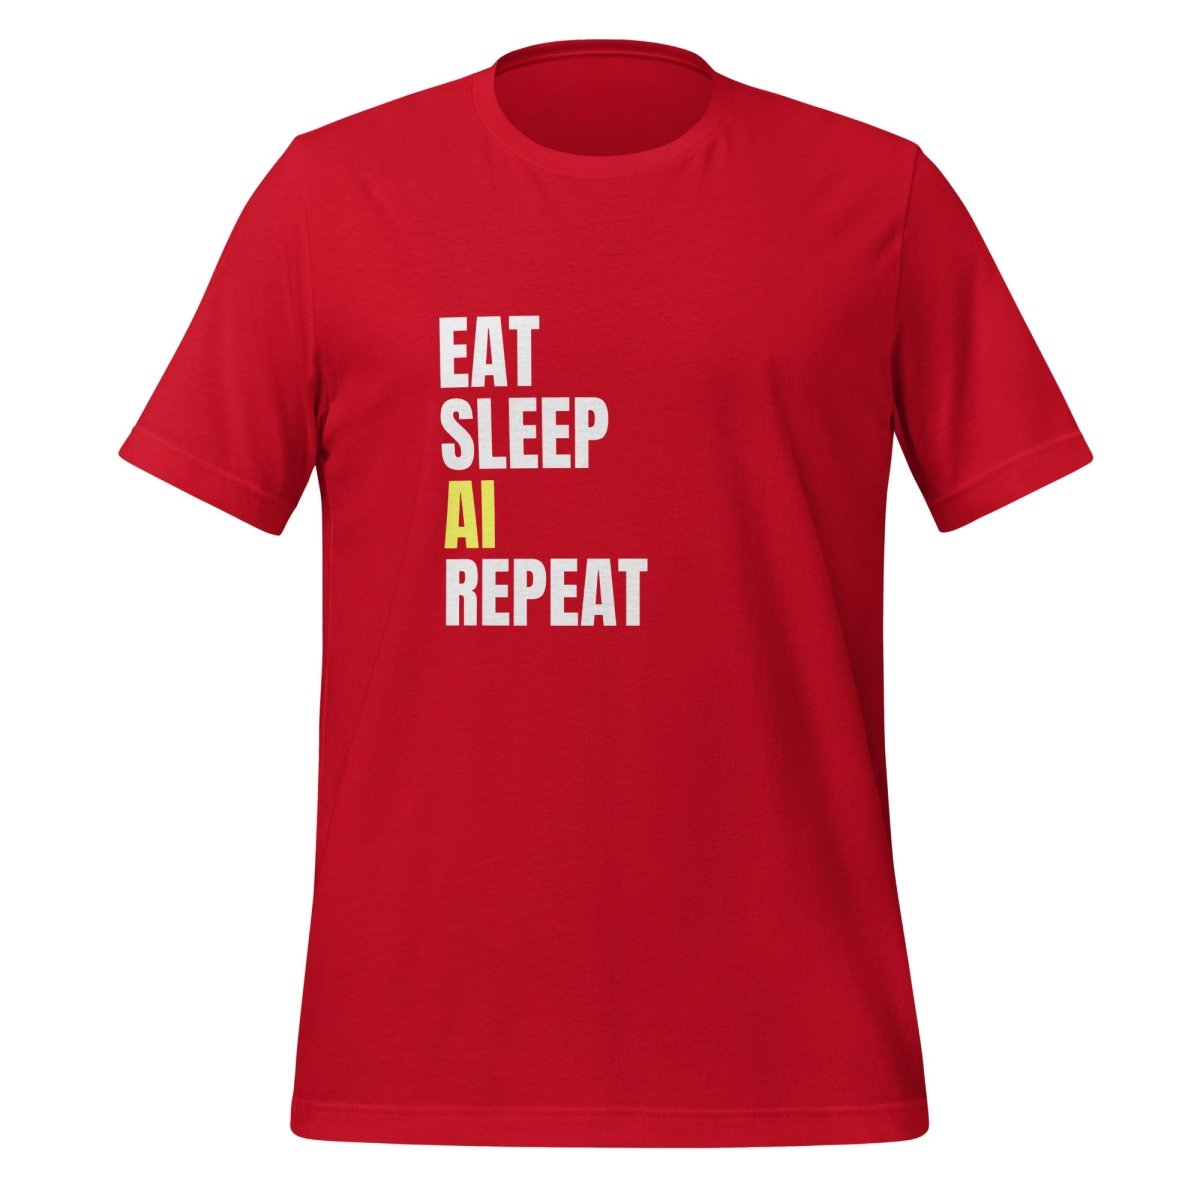 EAT SLEEP AI REPEAT T - Shirt 3 (unisex) - Red - AI Store